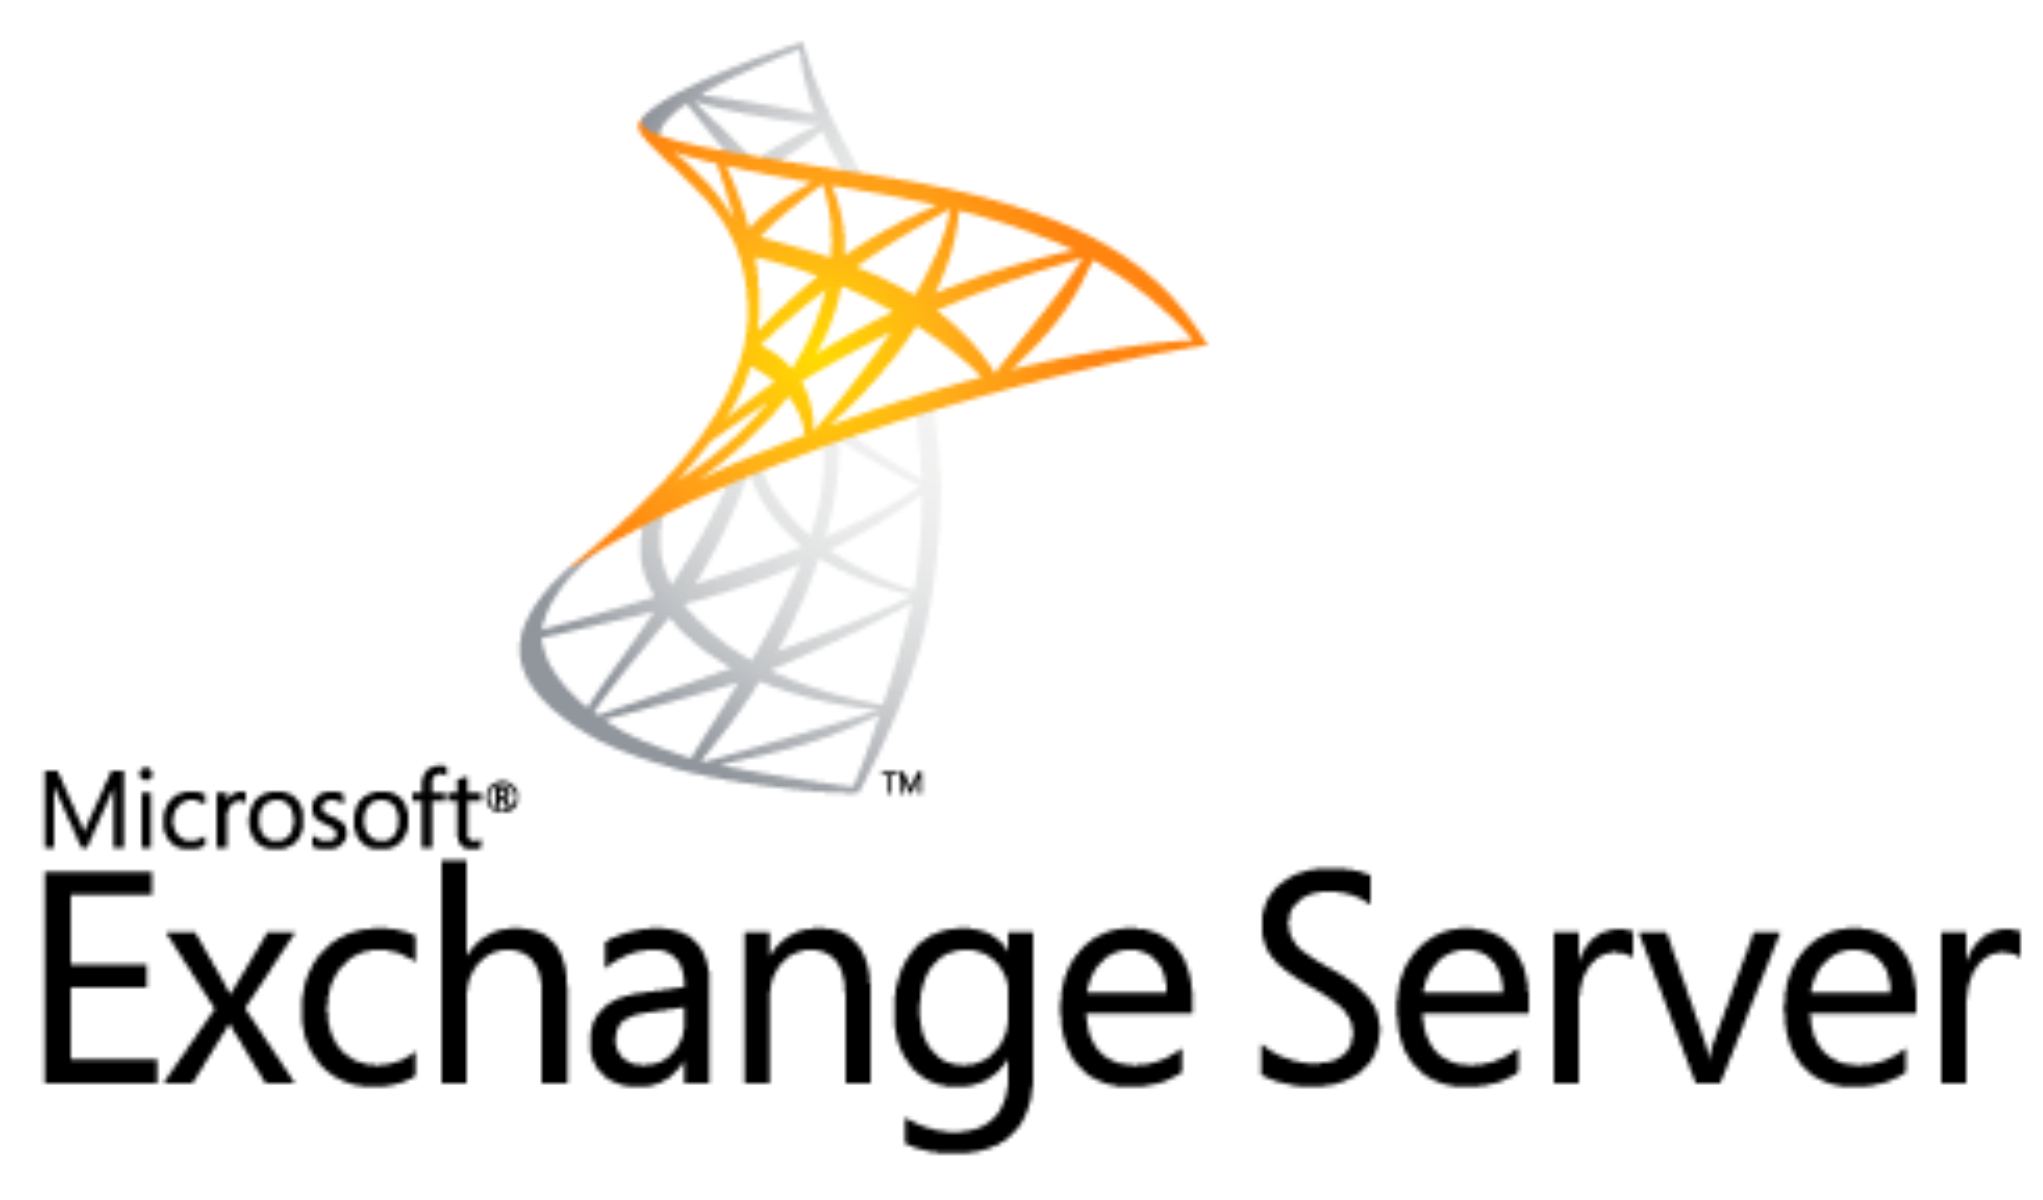 ms exchange logo